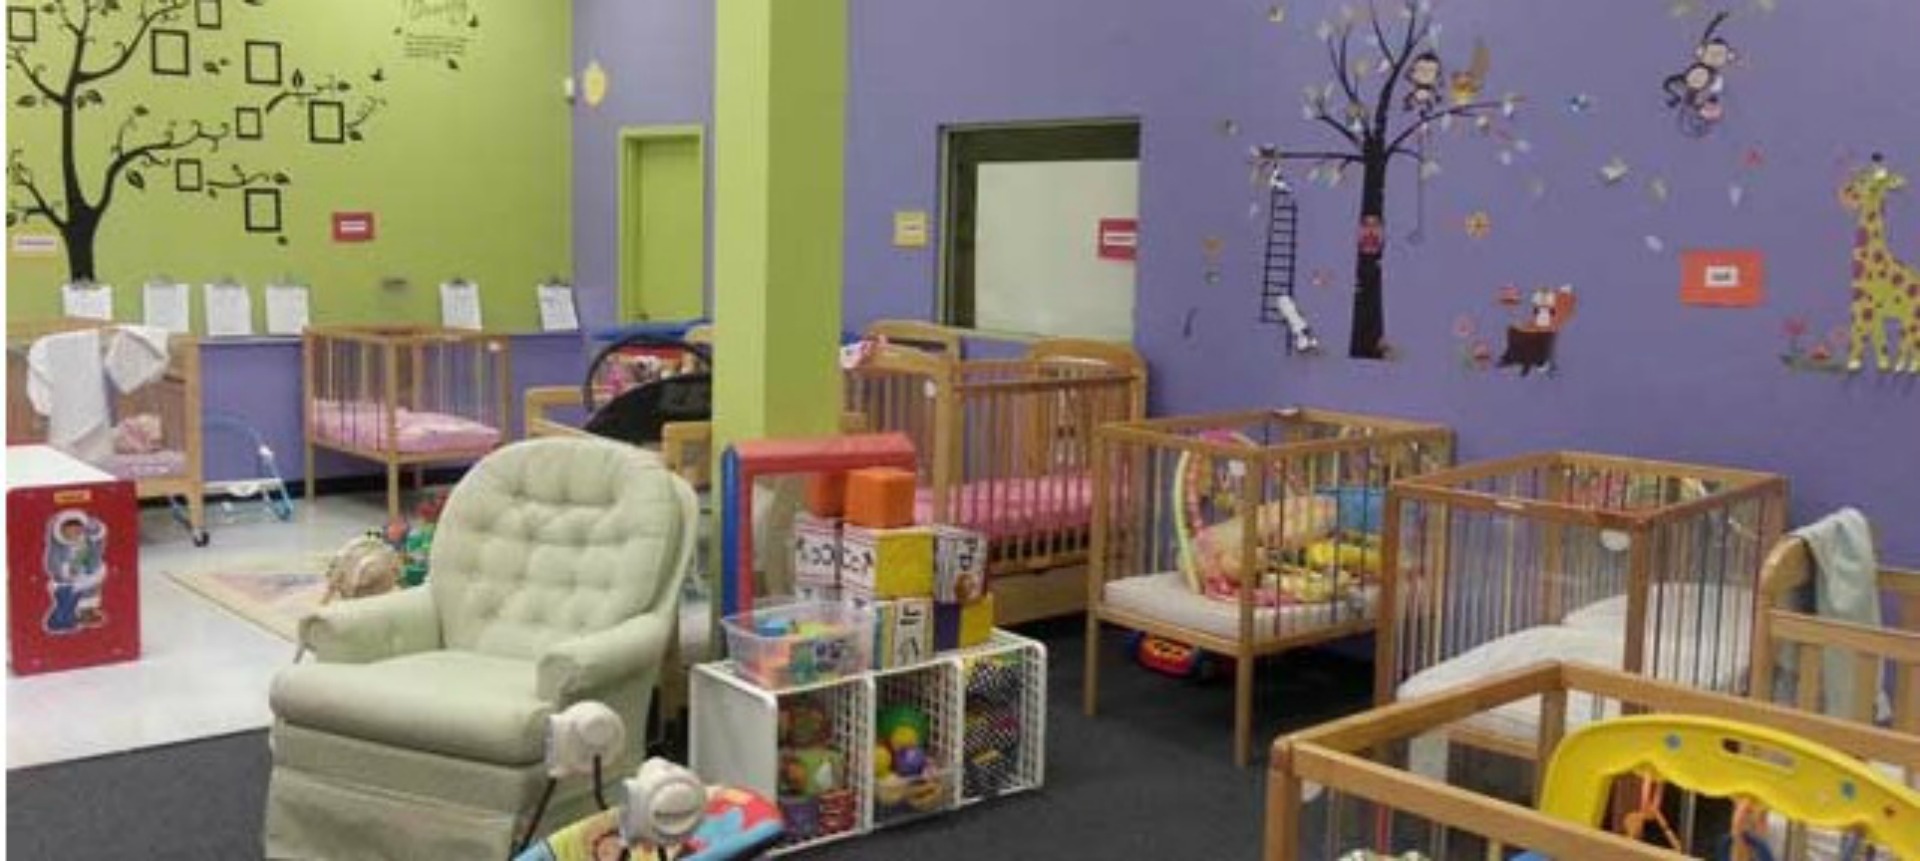 Infant room has cribs, floor play areas, soft toys